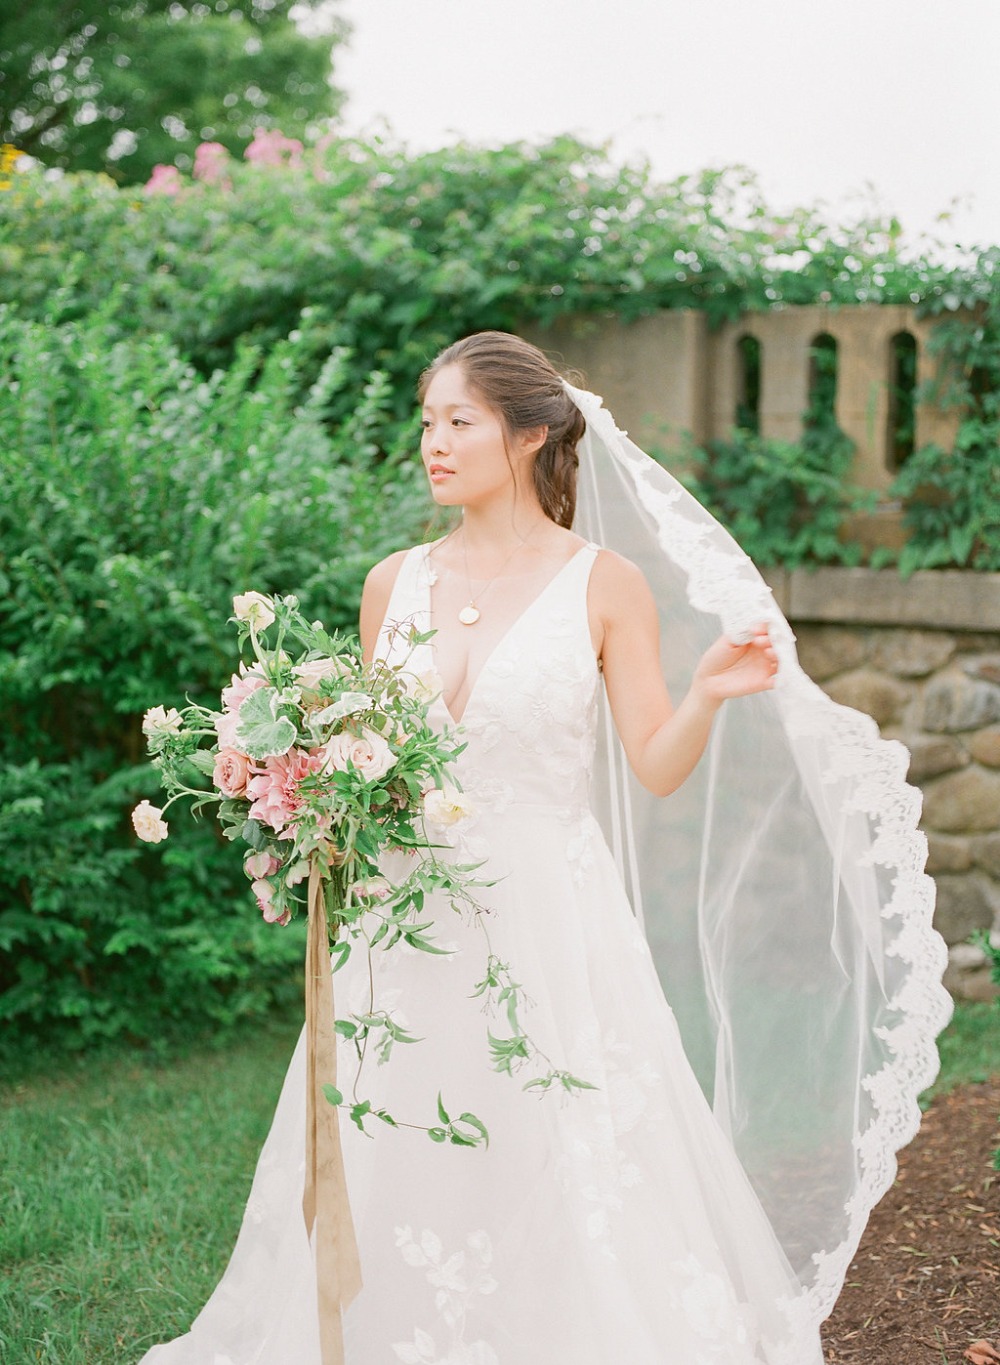 Scalloped wedding veil